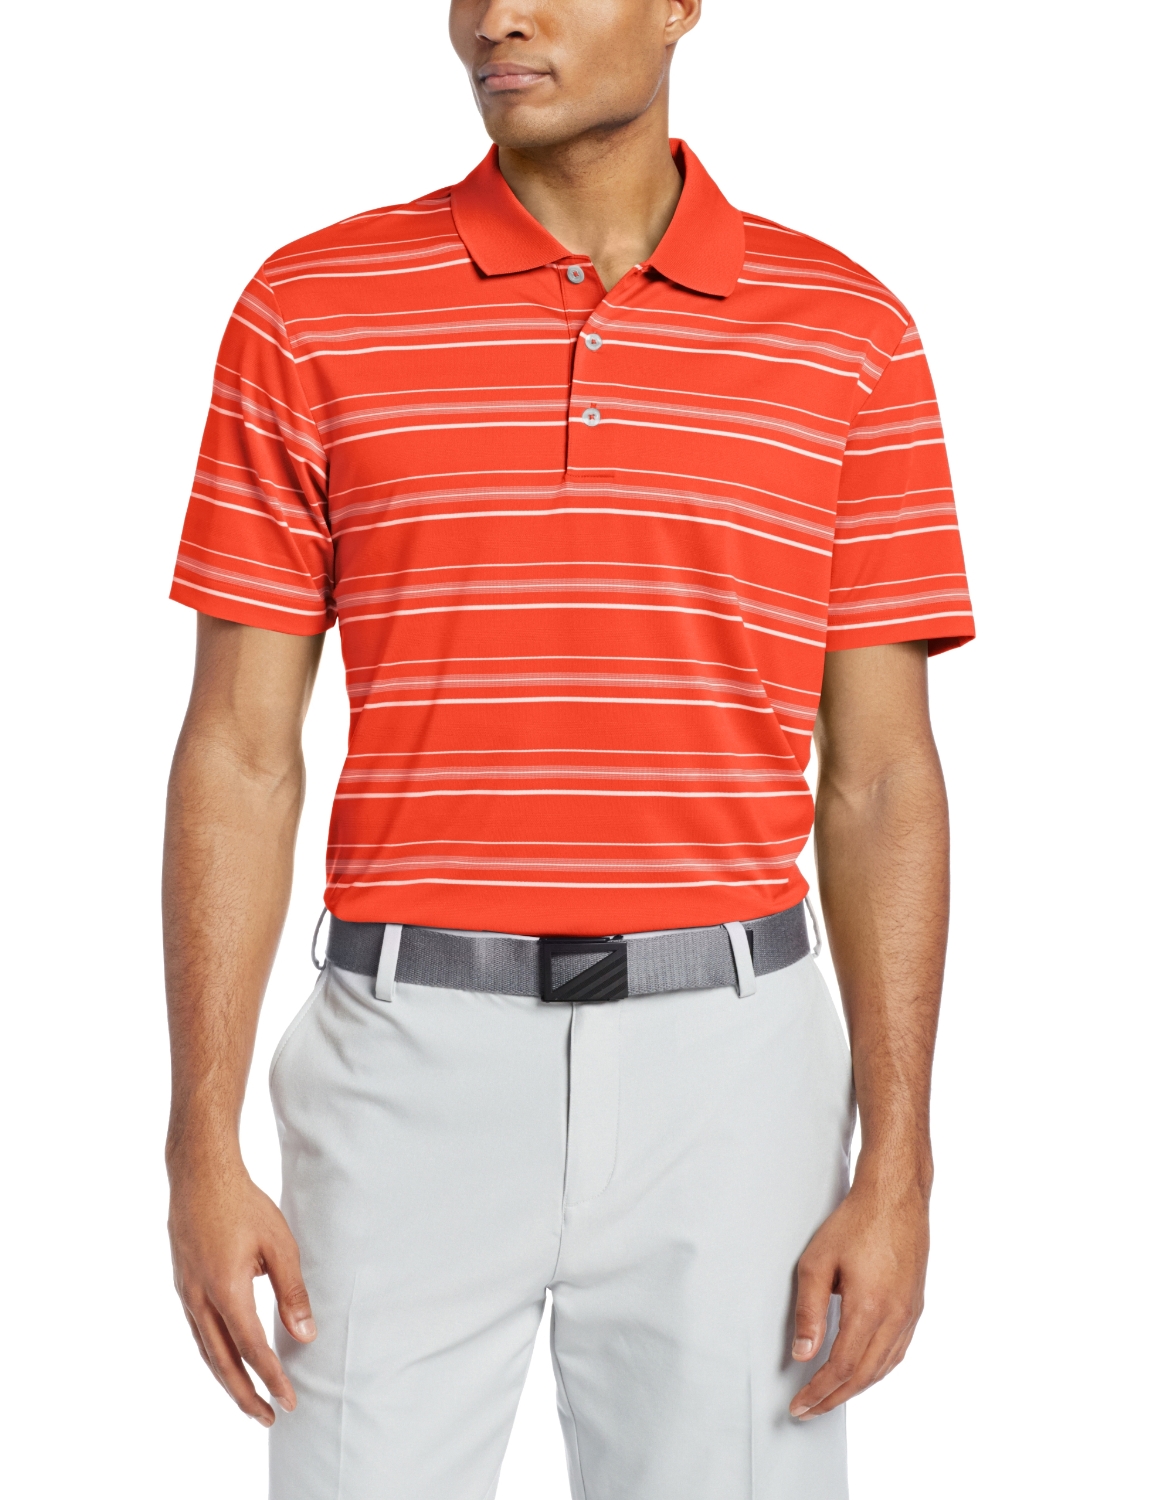 Mens Adidas Puremotion Textured Stripe Golf Polo Shirts